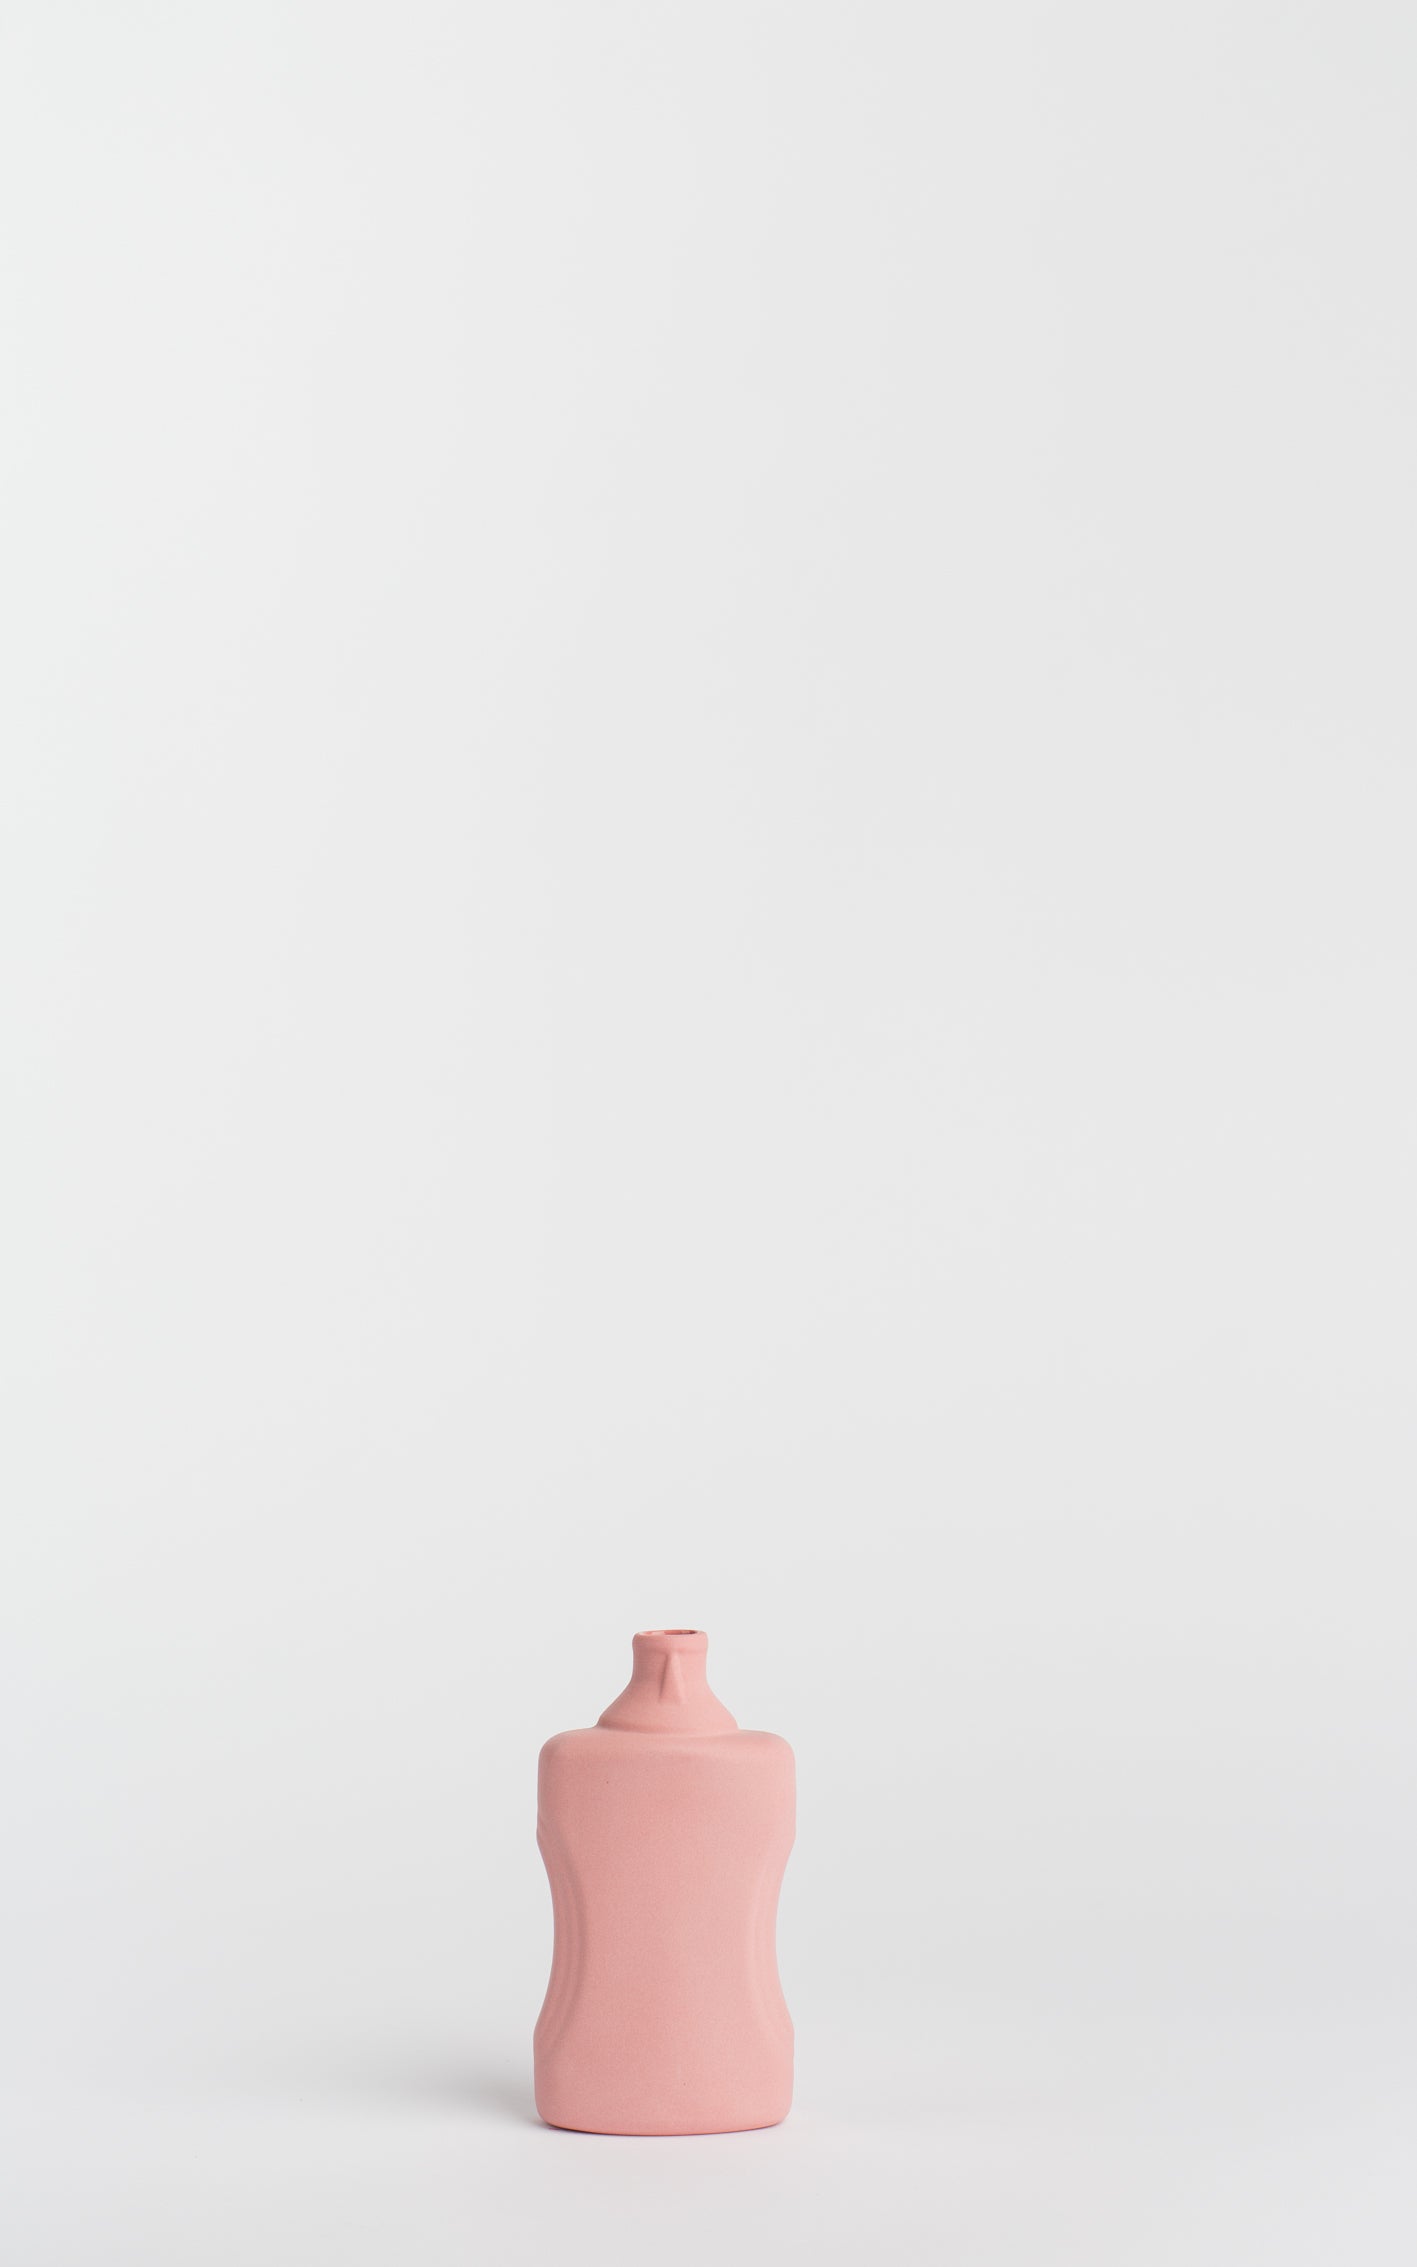 Foekje Fleur - Bottle vase #21 blush